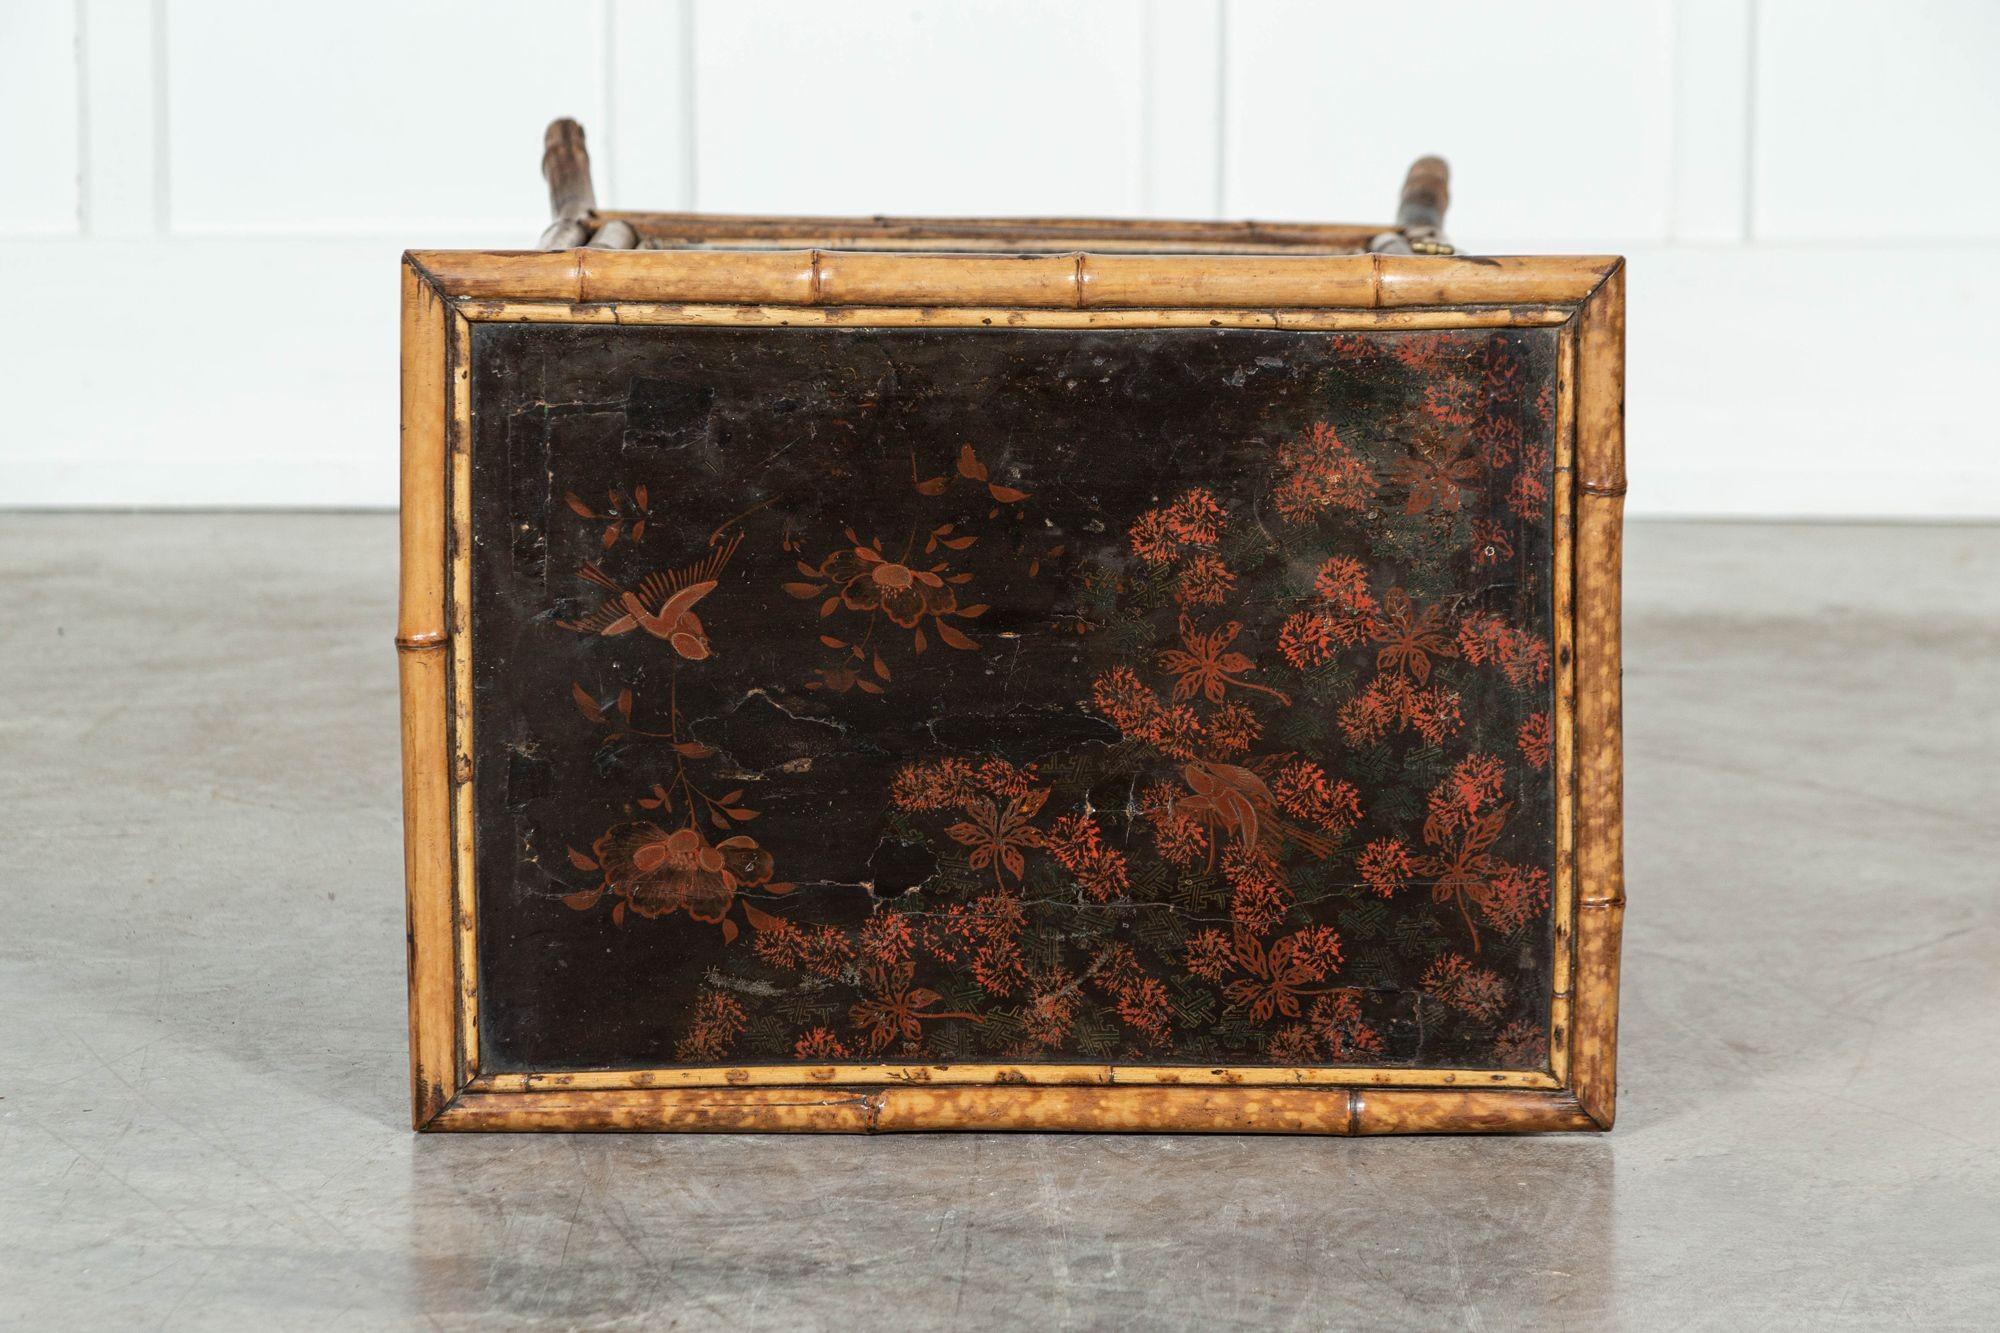 circa 1880
19th century English Glazed Bamboo Cabinet
sku 1521
W55 x D41 x H95 cm